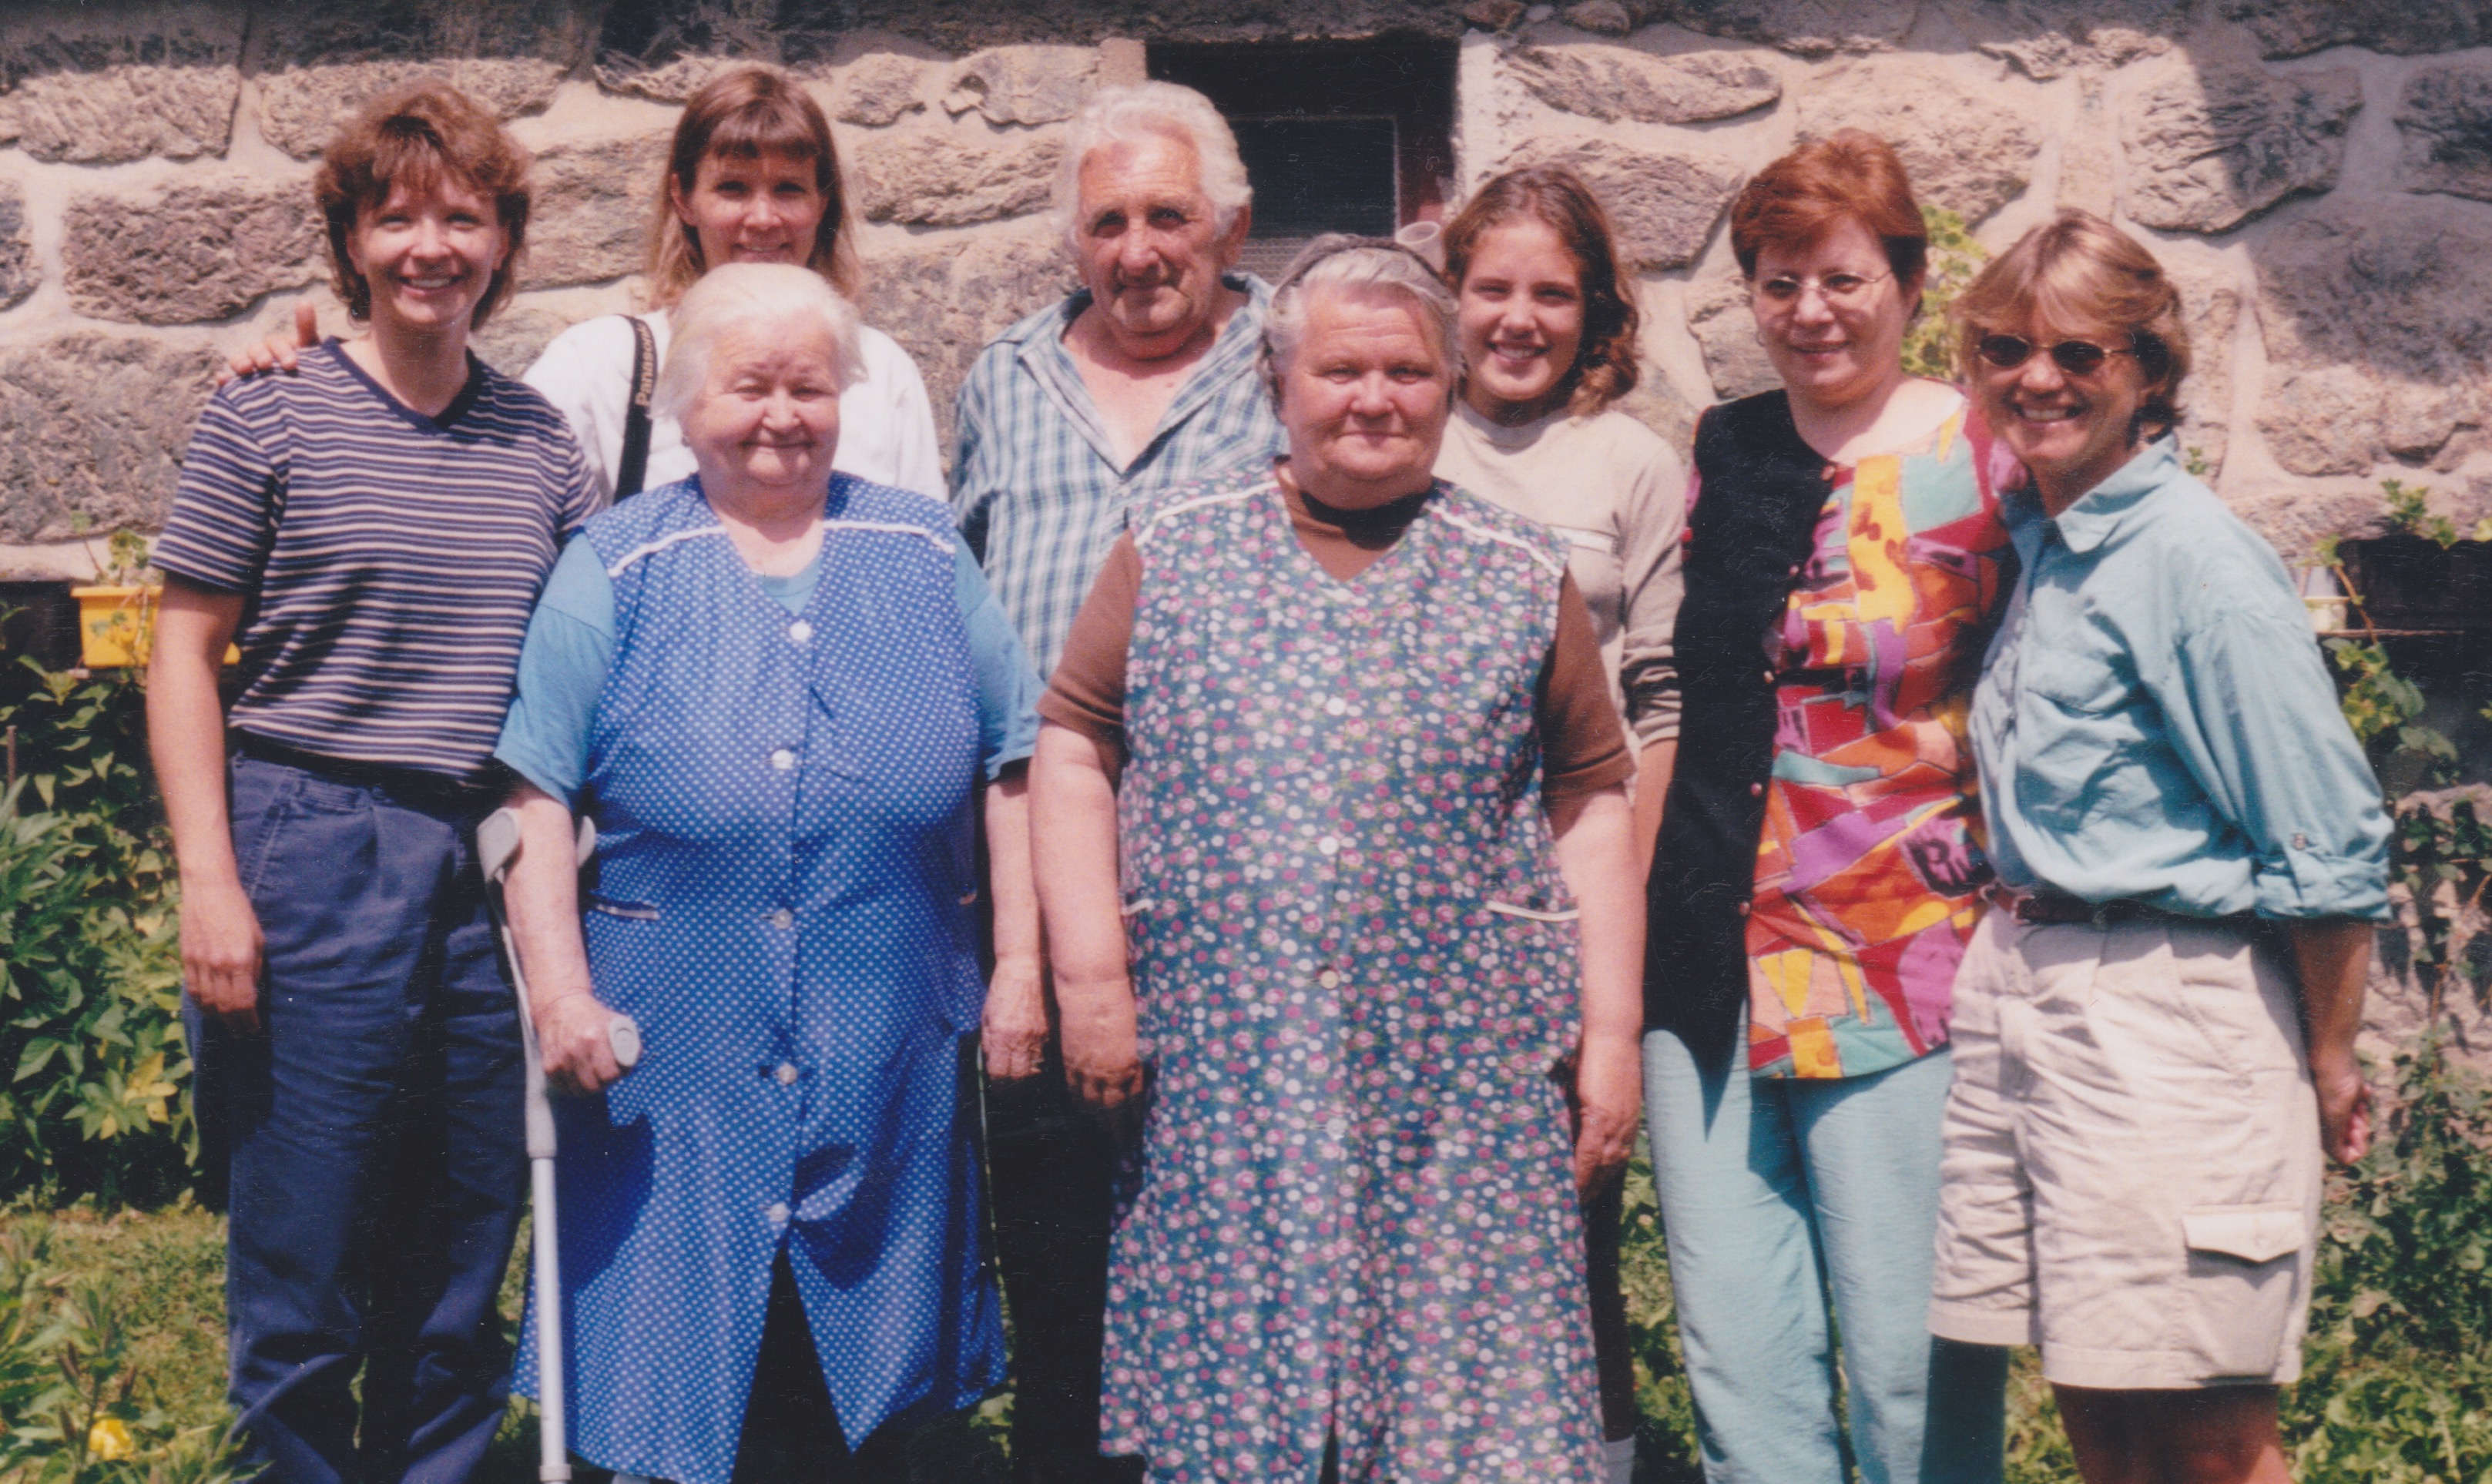 Saksa relatives in Gelnica, Slovakia on June 21, 2000